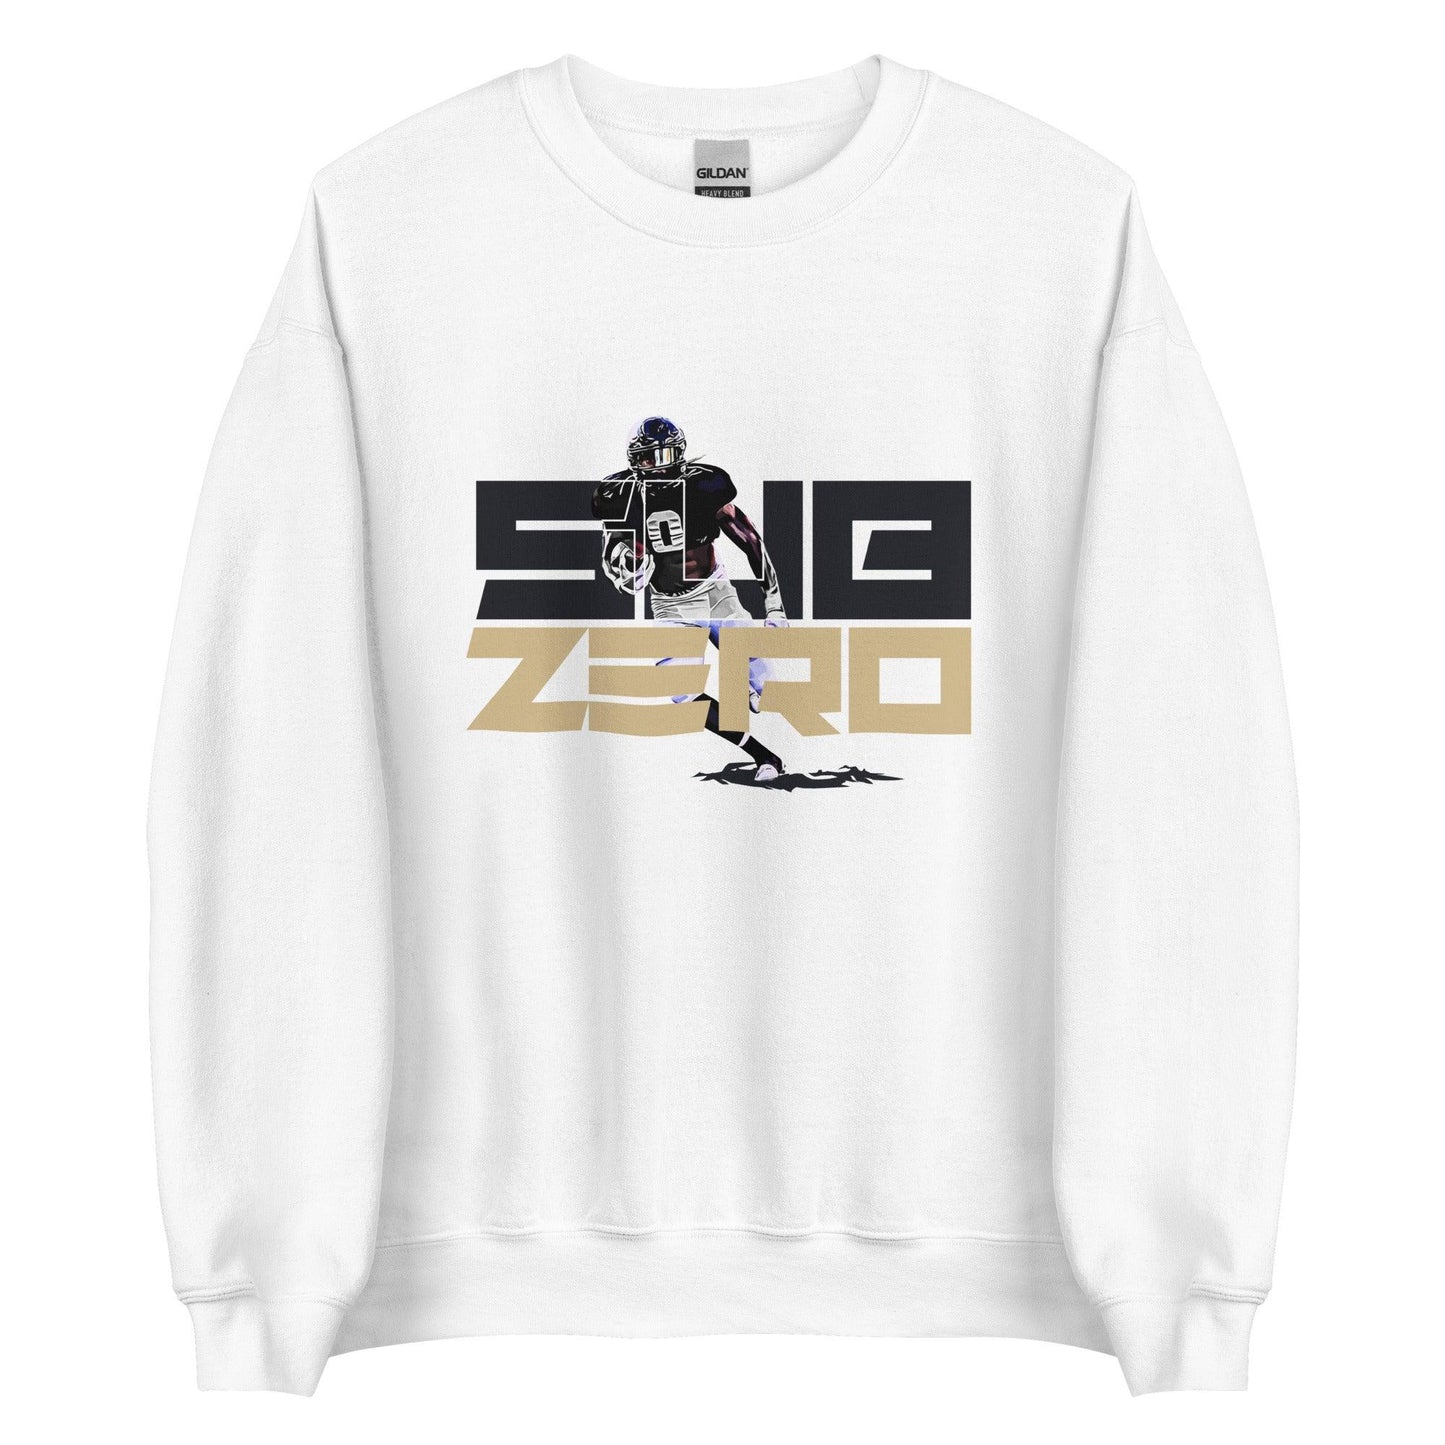 Christian Turner “Sub Zero” Sweatshirt - Fan Arch